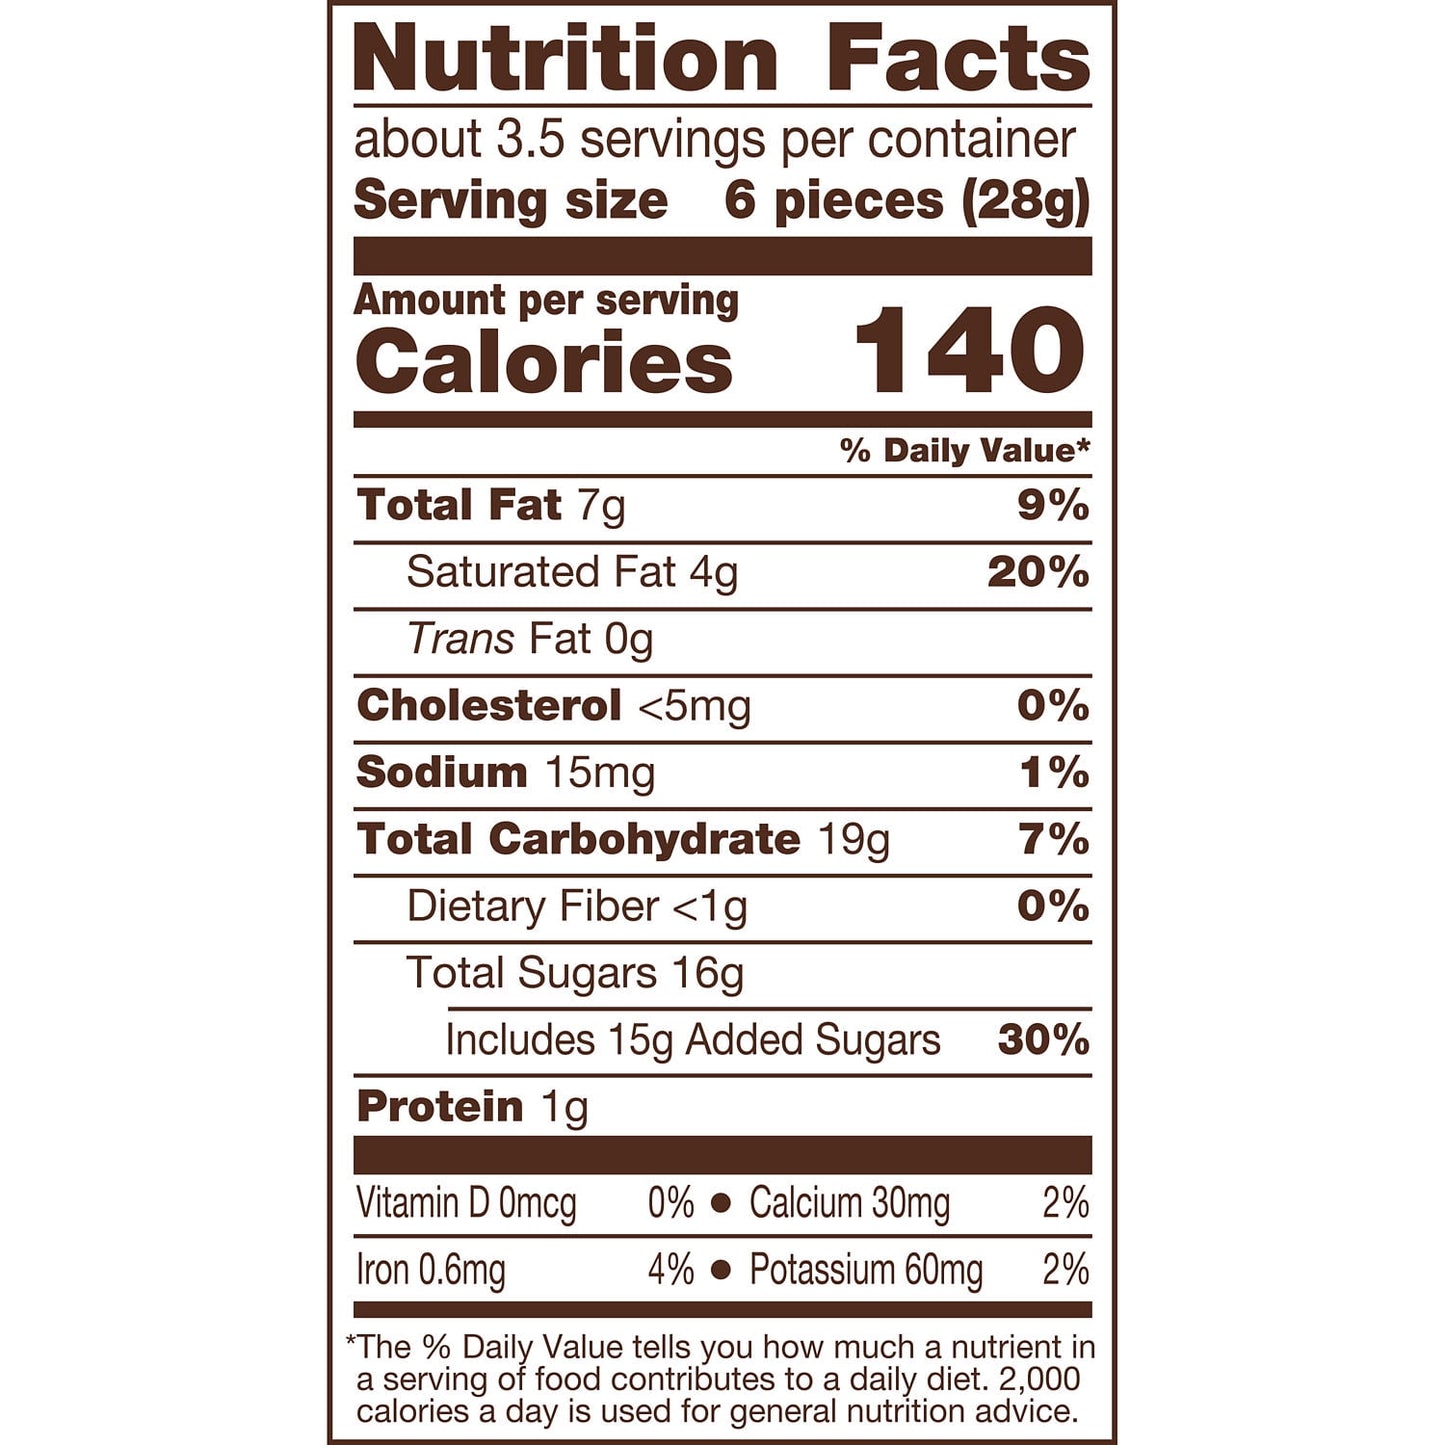 Kit Kat® Minis Milk Chocolate Wafer Candy, Bag 3.48 oz